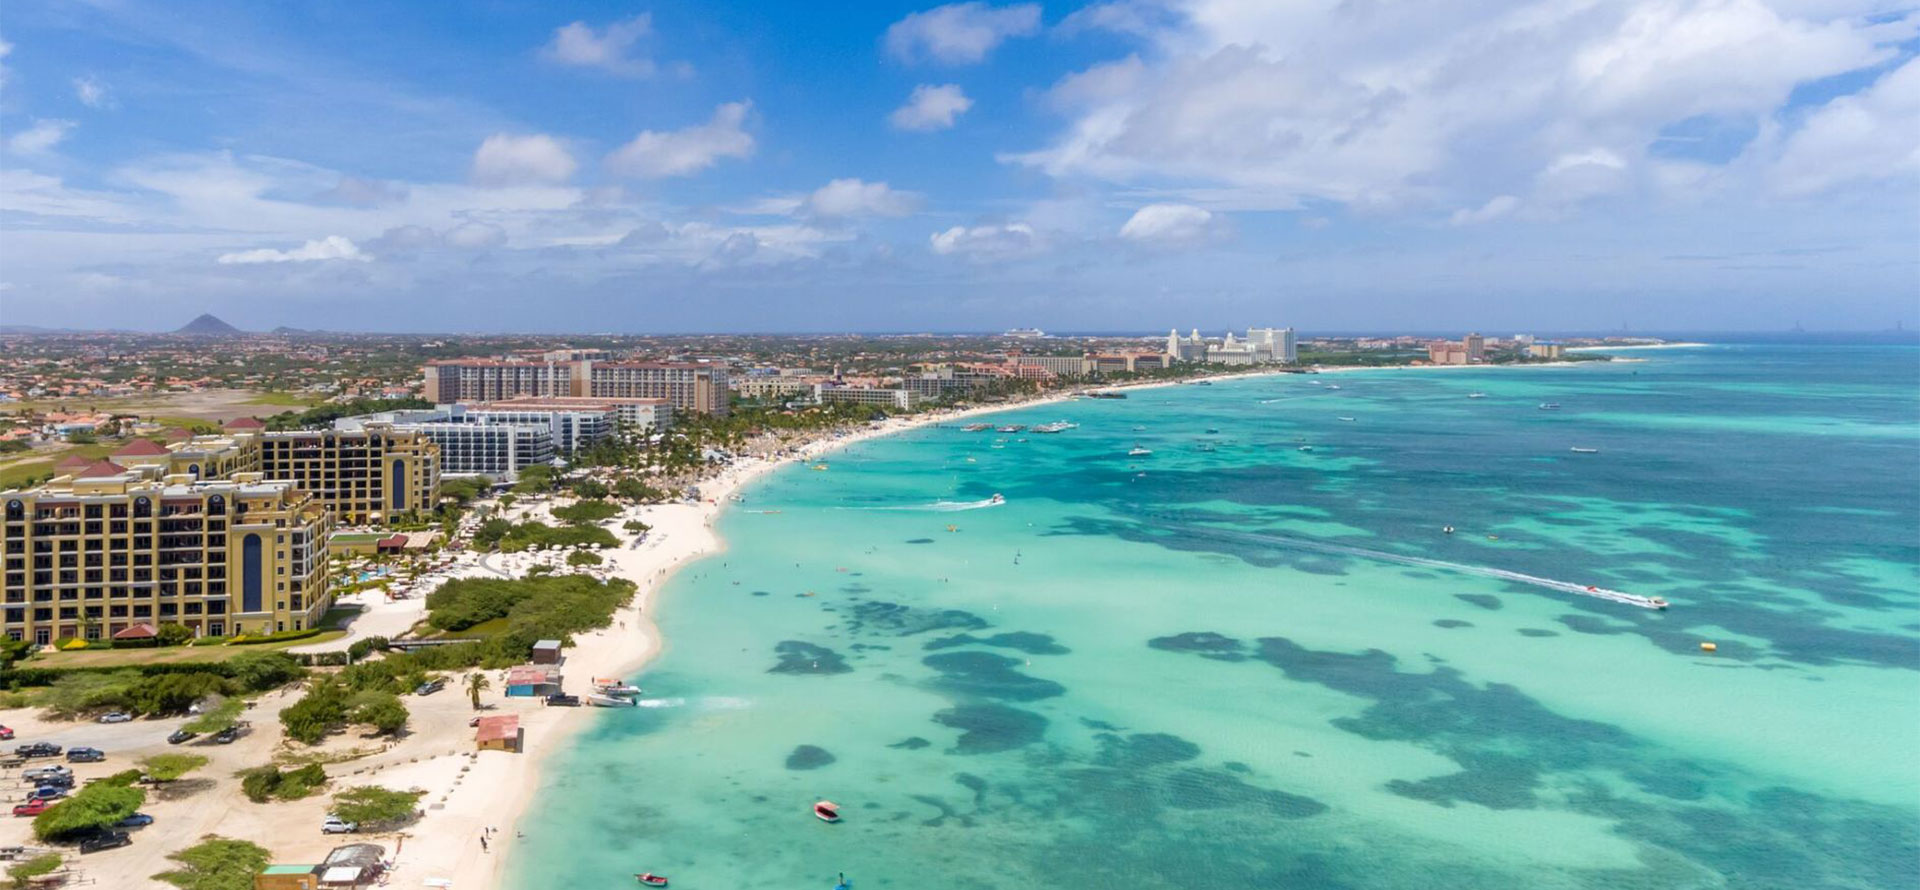 Aruba vs cancun landscape.